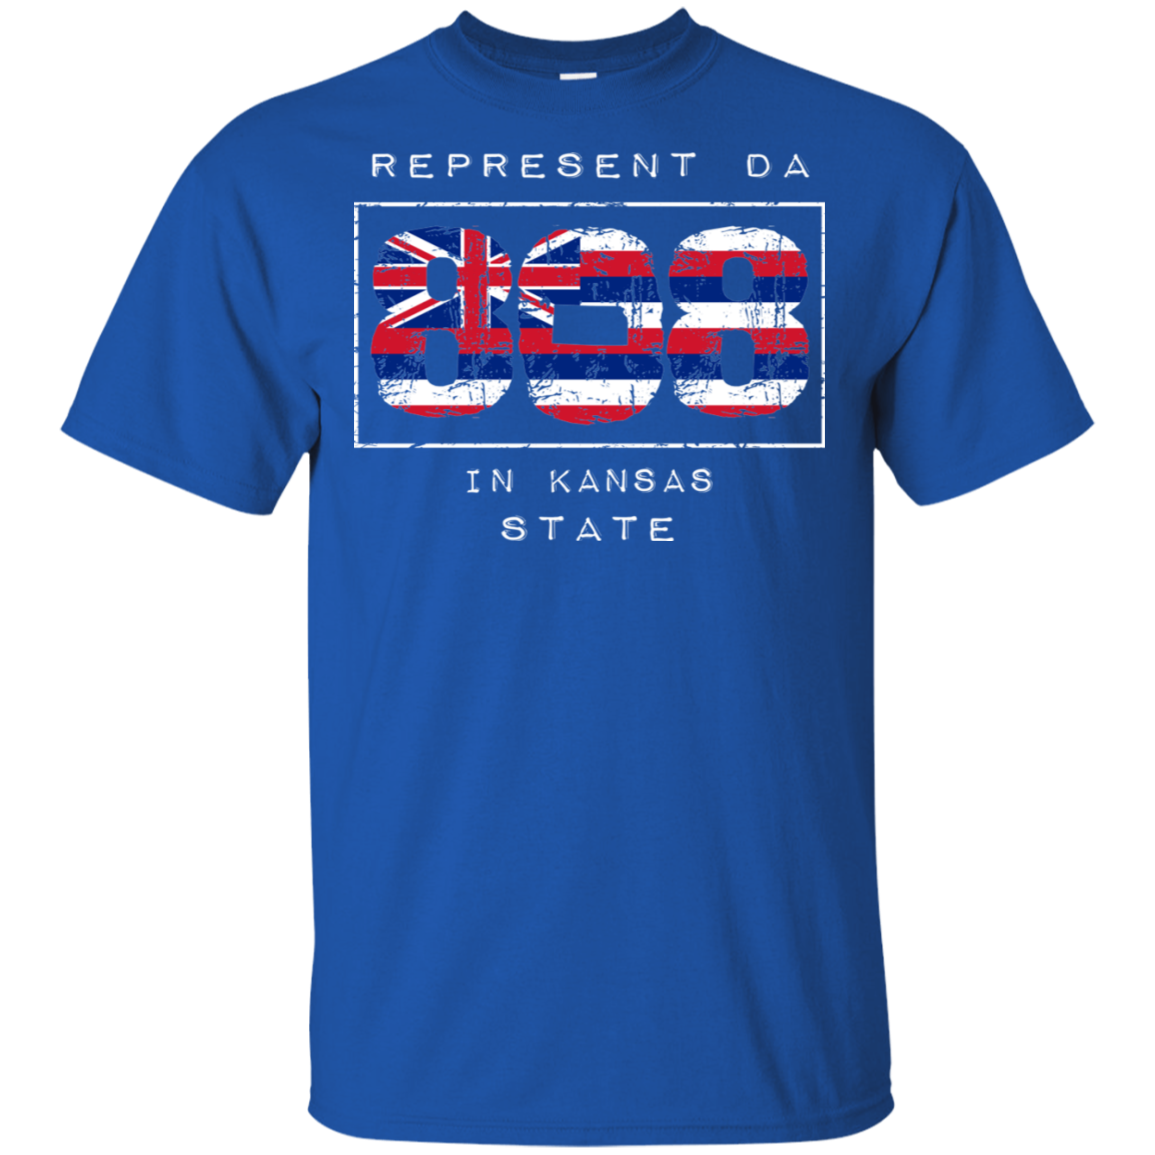 Rep Da 808 In Kansas State Ultra Cotton T-Shirt, T-Shirts, Hawaii Nei All Day